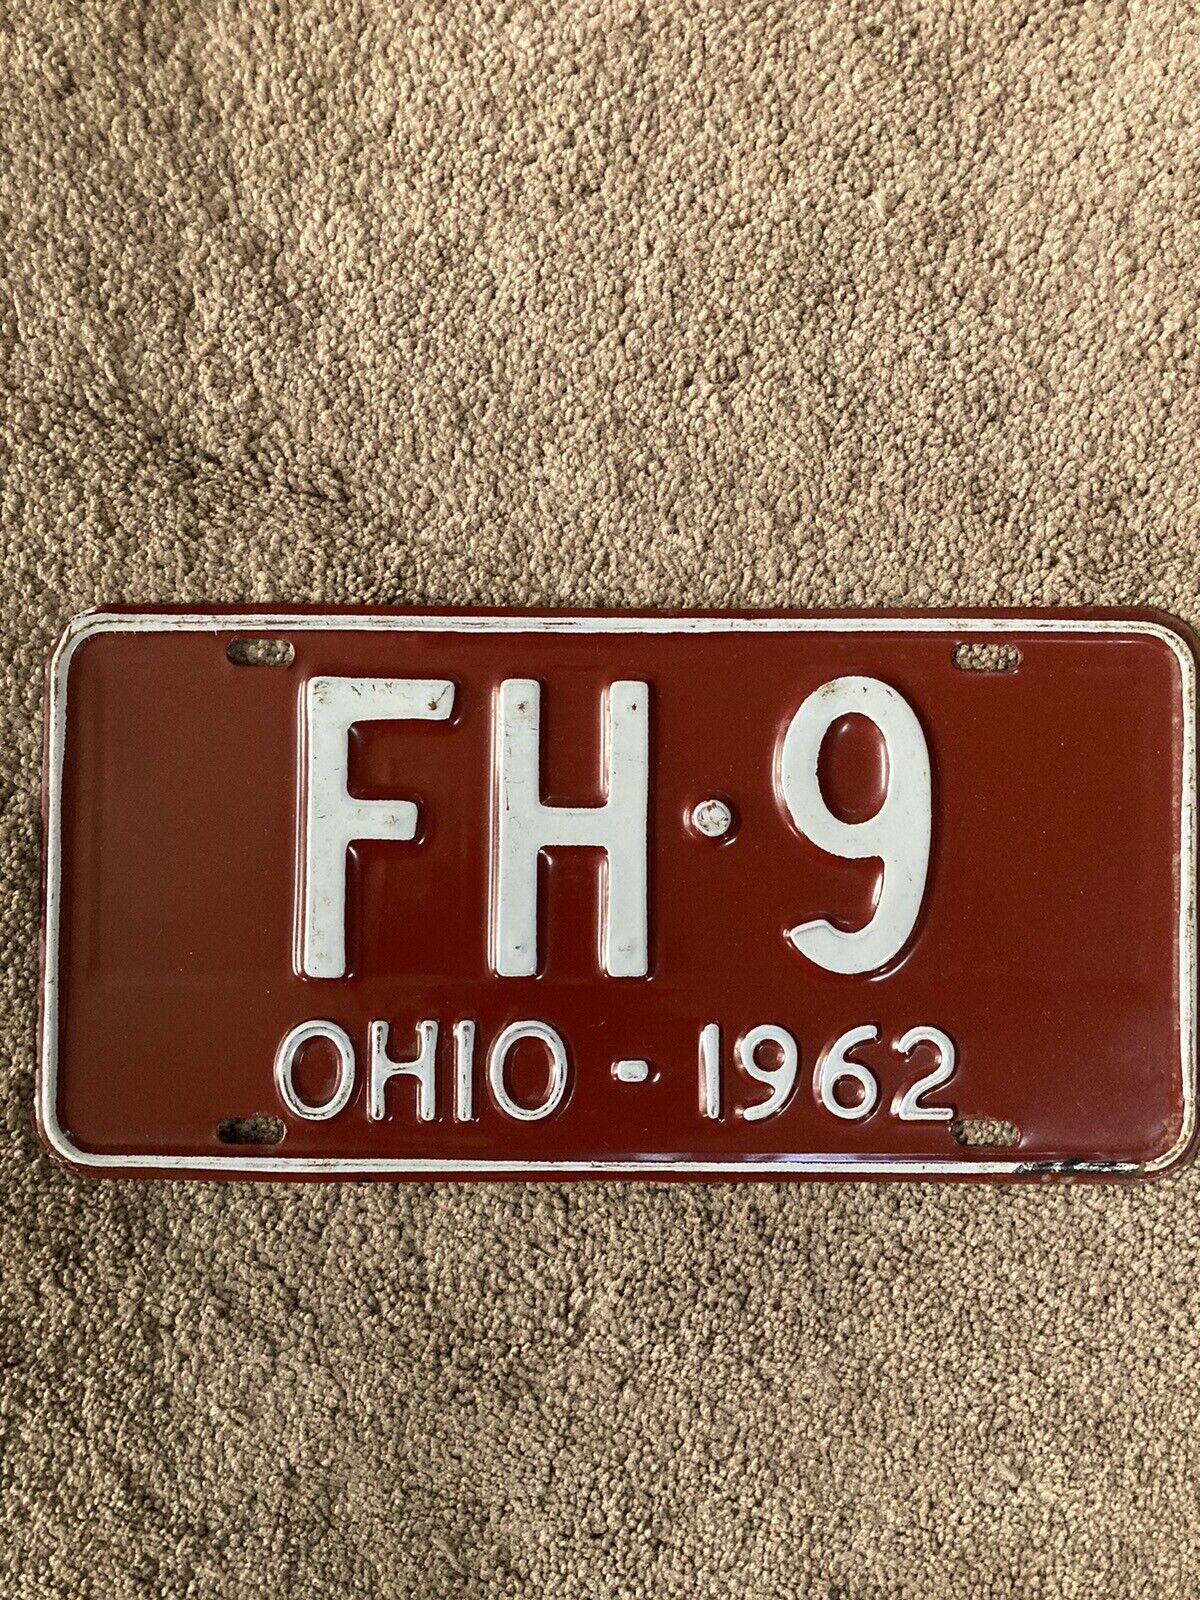 1962 Ohio License Plate - FH 9 - Very Nice